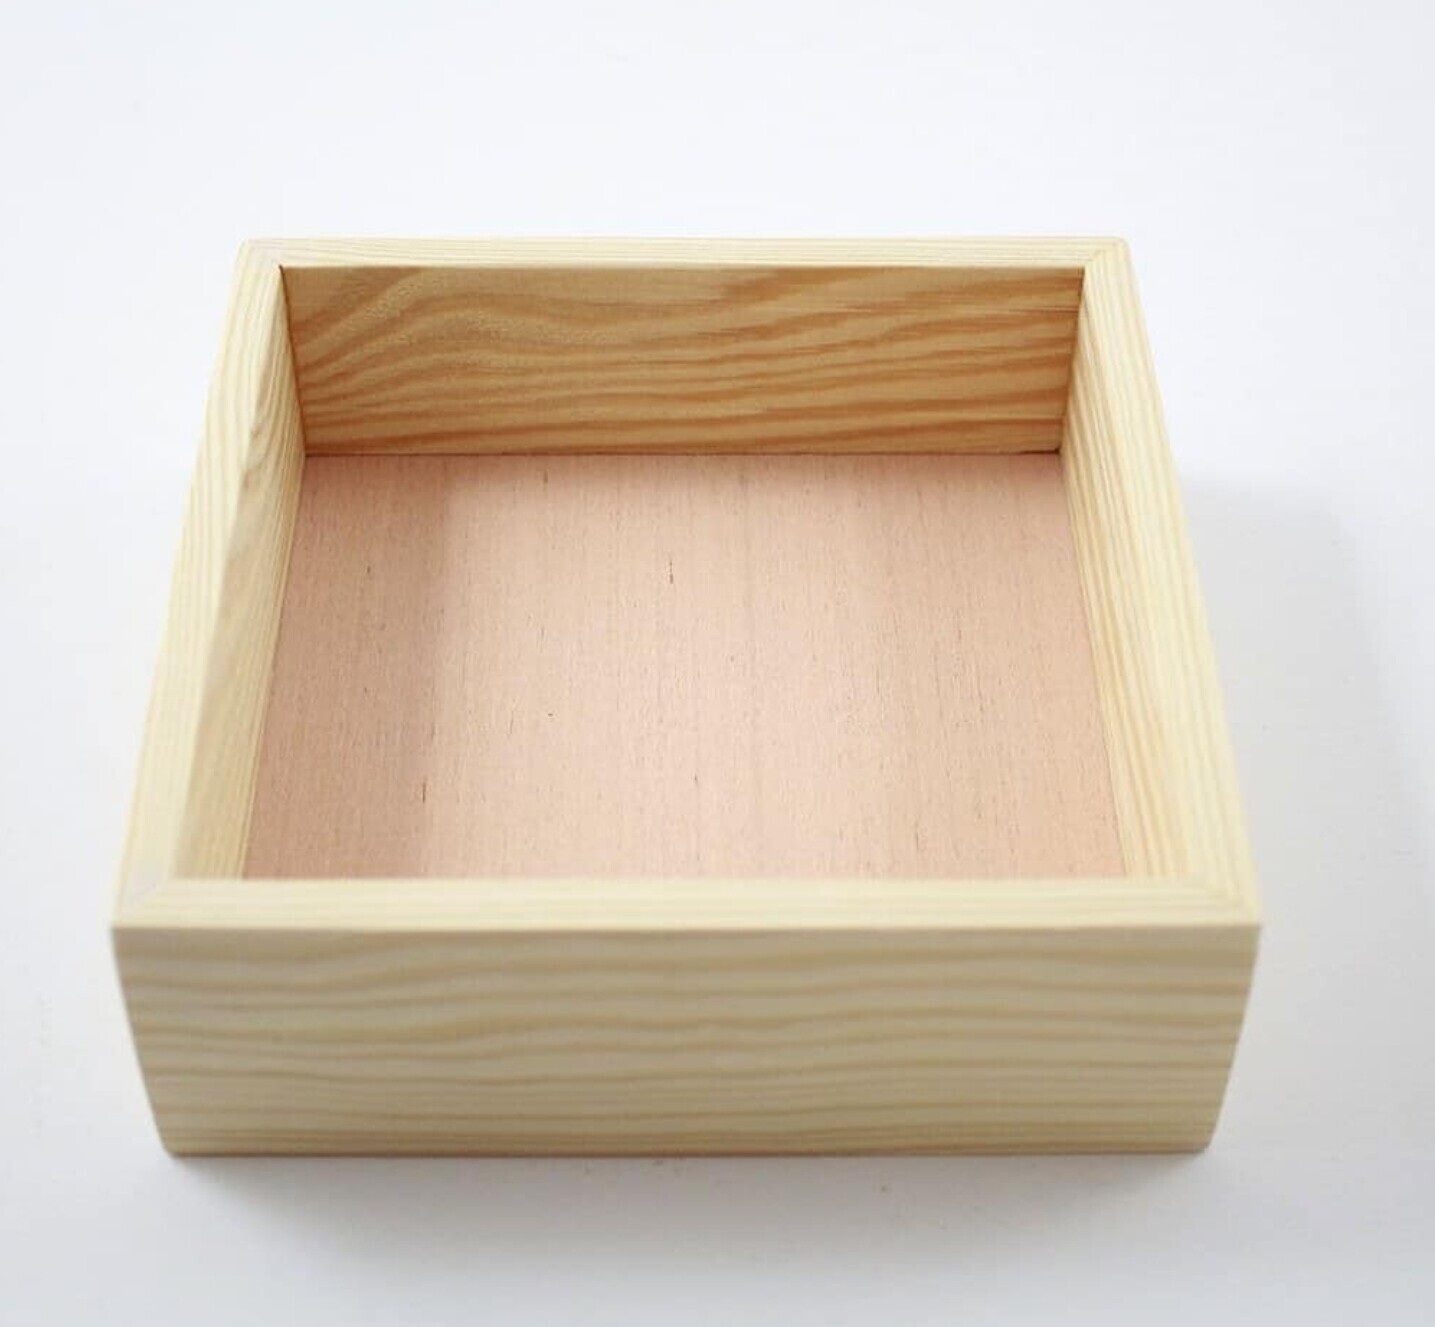 8x8x3 inch Wooden box 